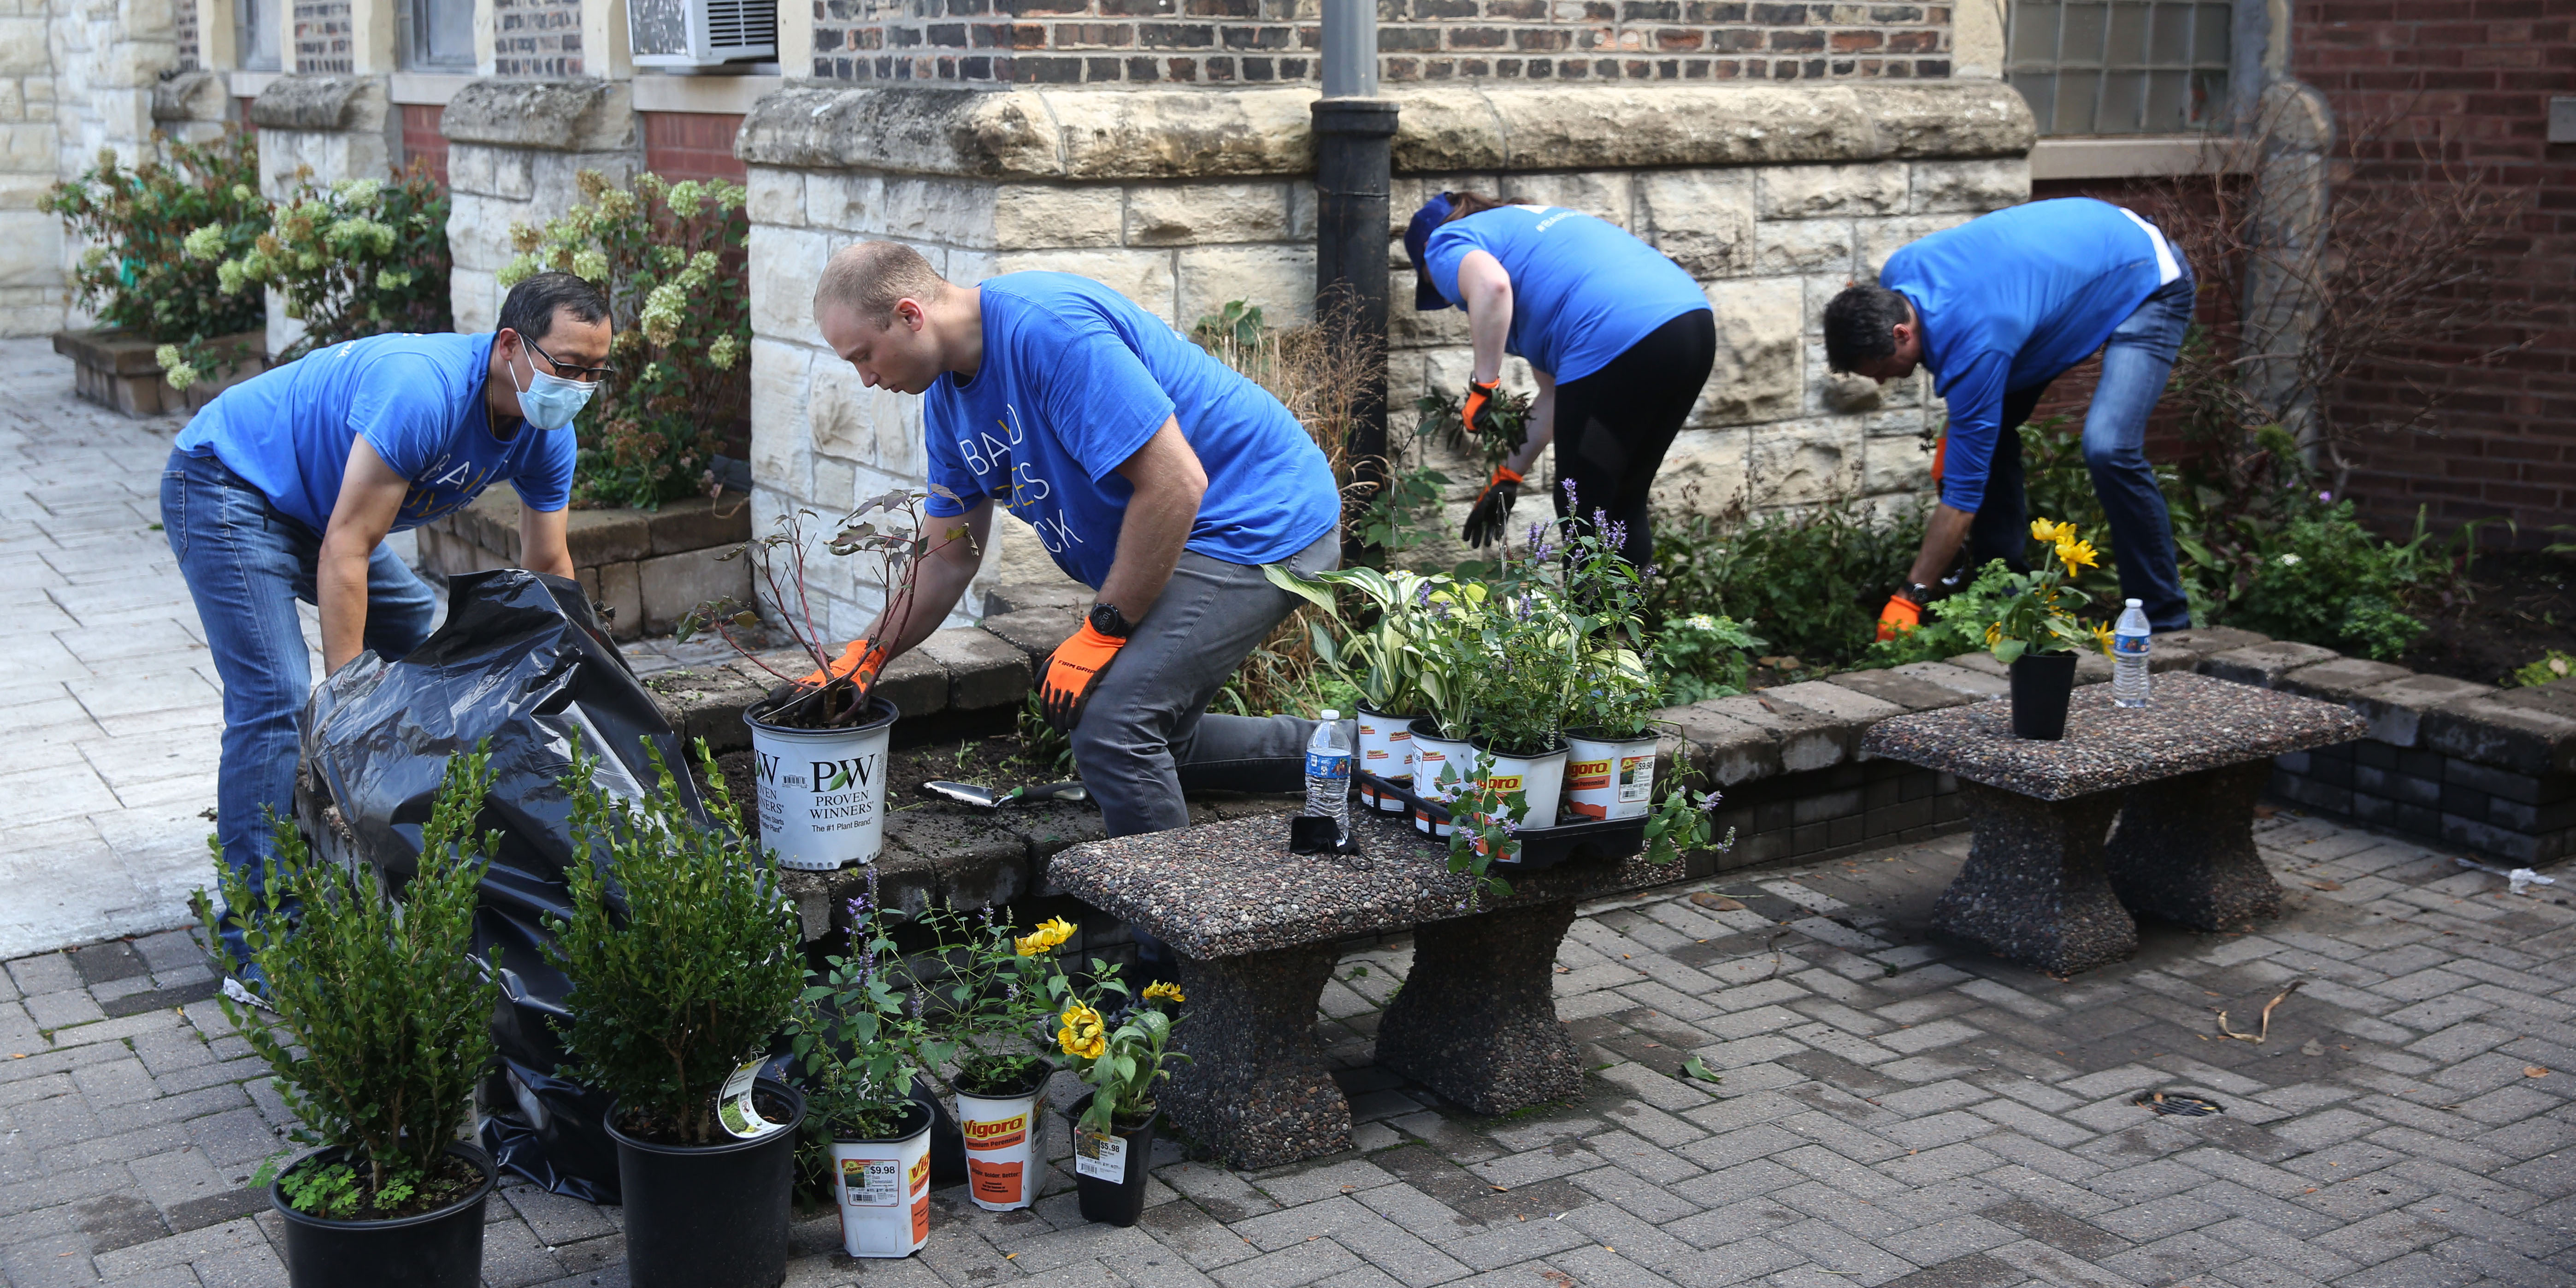 Baird Capital associates volunteering in a garden.